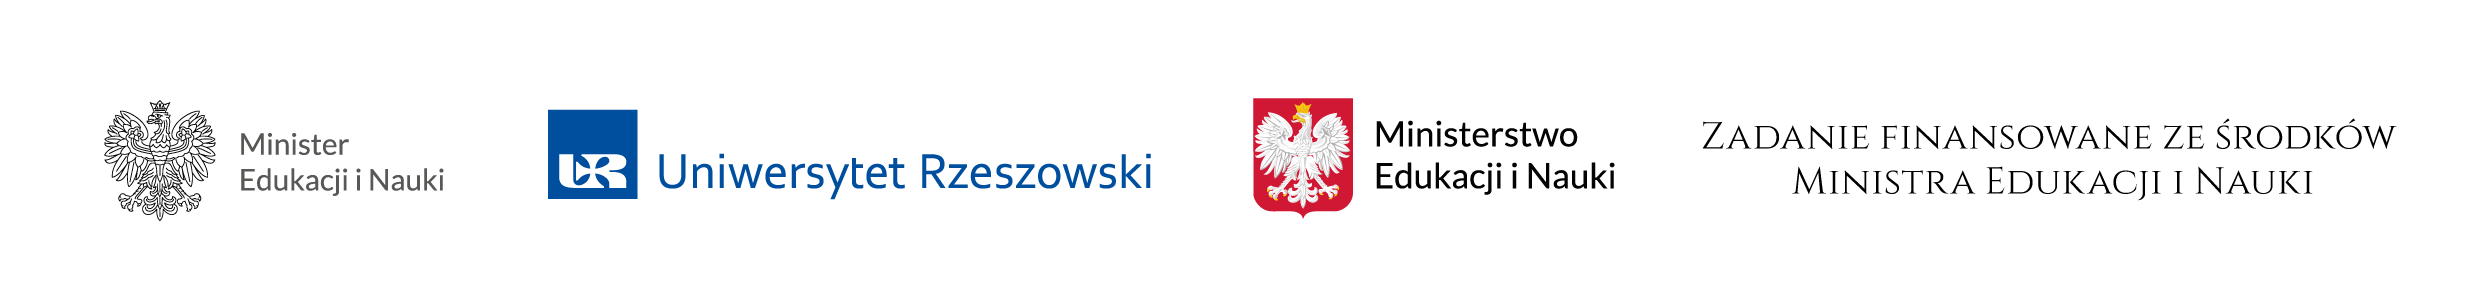 Ministerstwo z logo UR_nowe z logo ministra-01.png [58.79 KB]